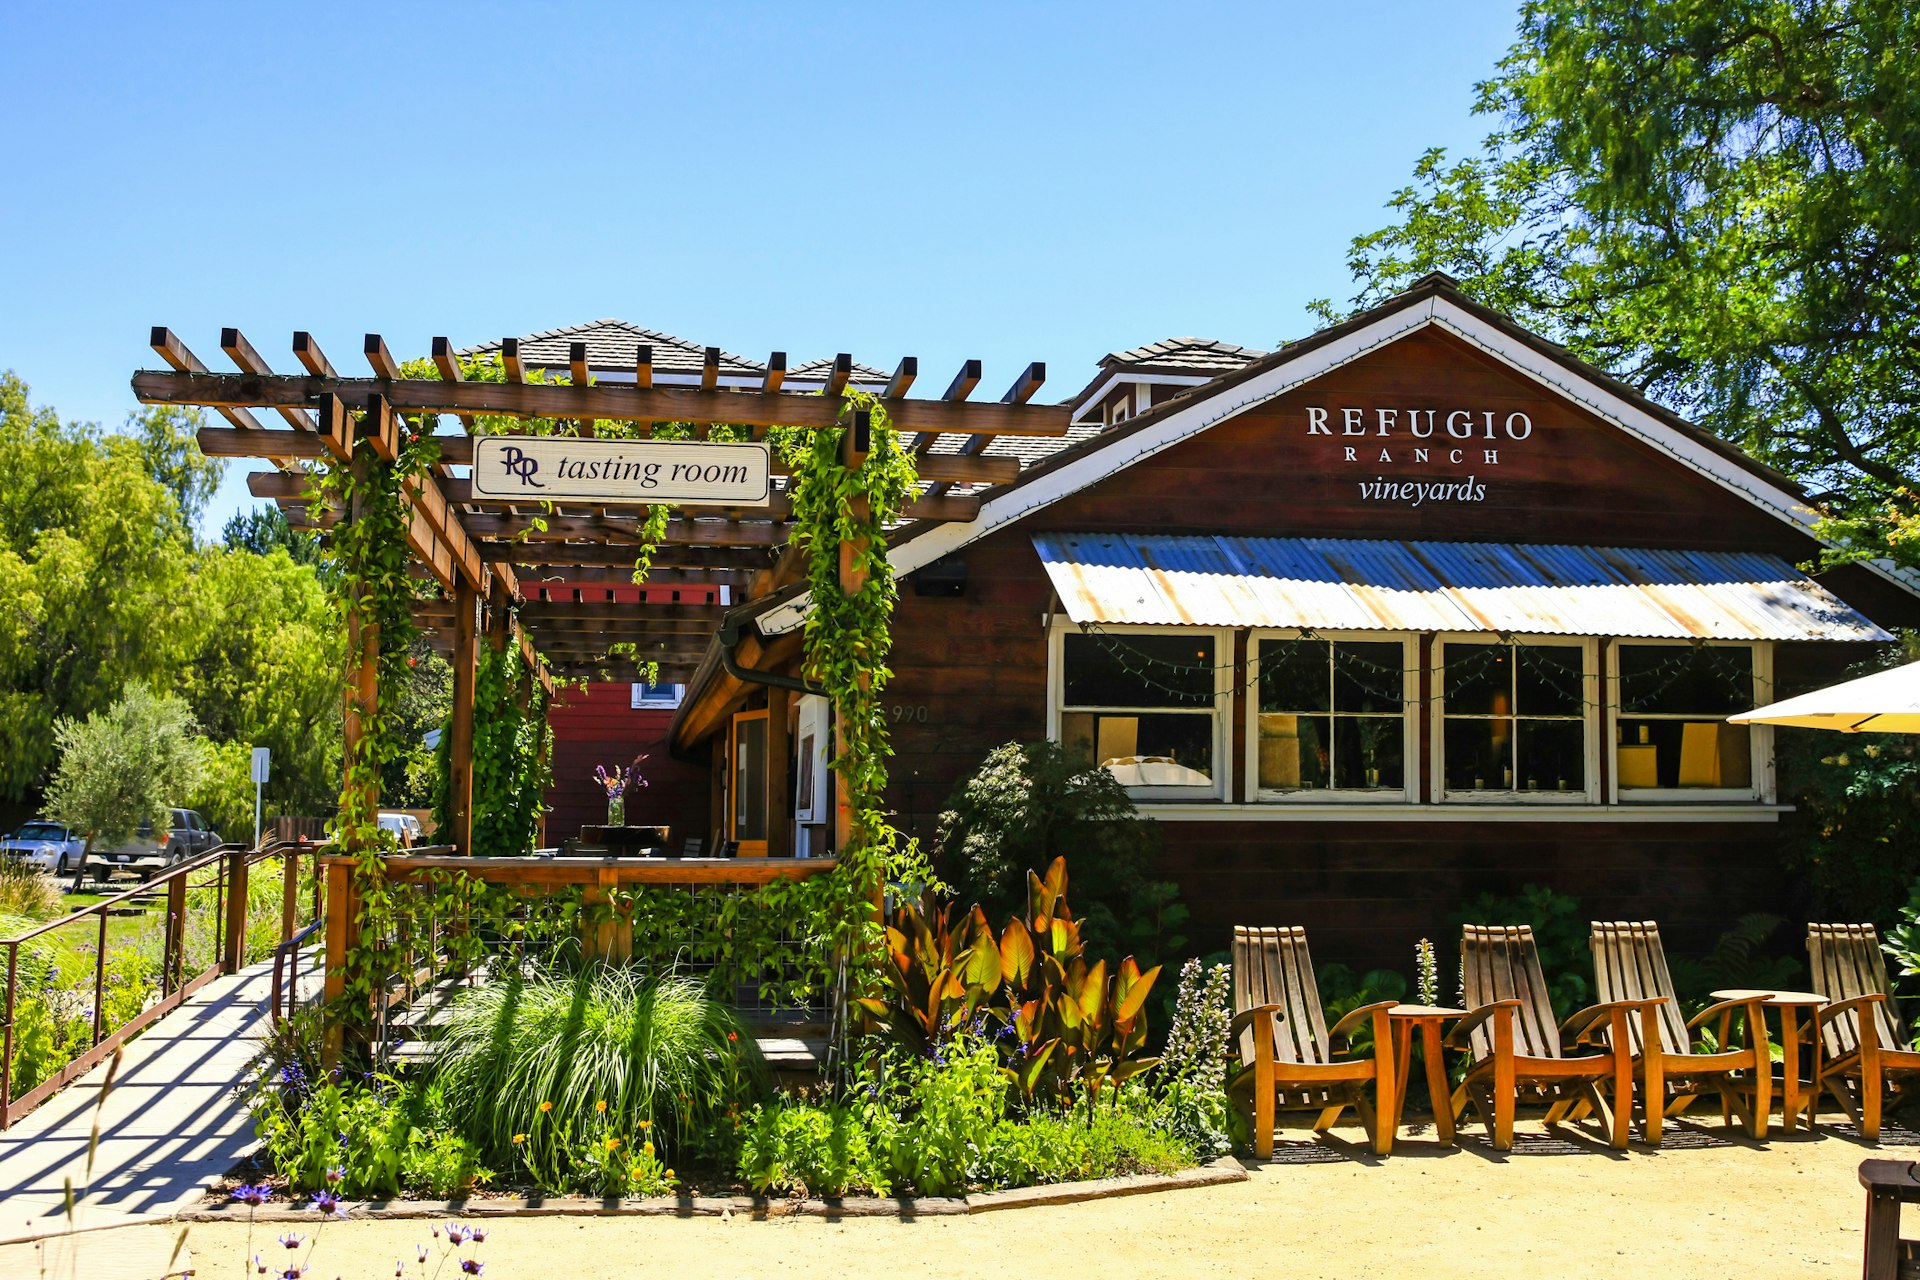 The external facade of the Refugio wine tasting store in Los Olivos, CA